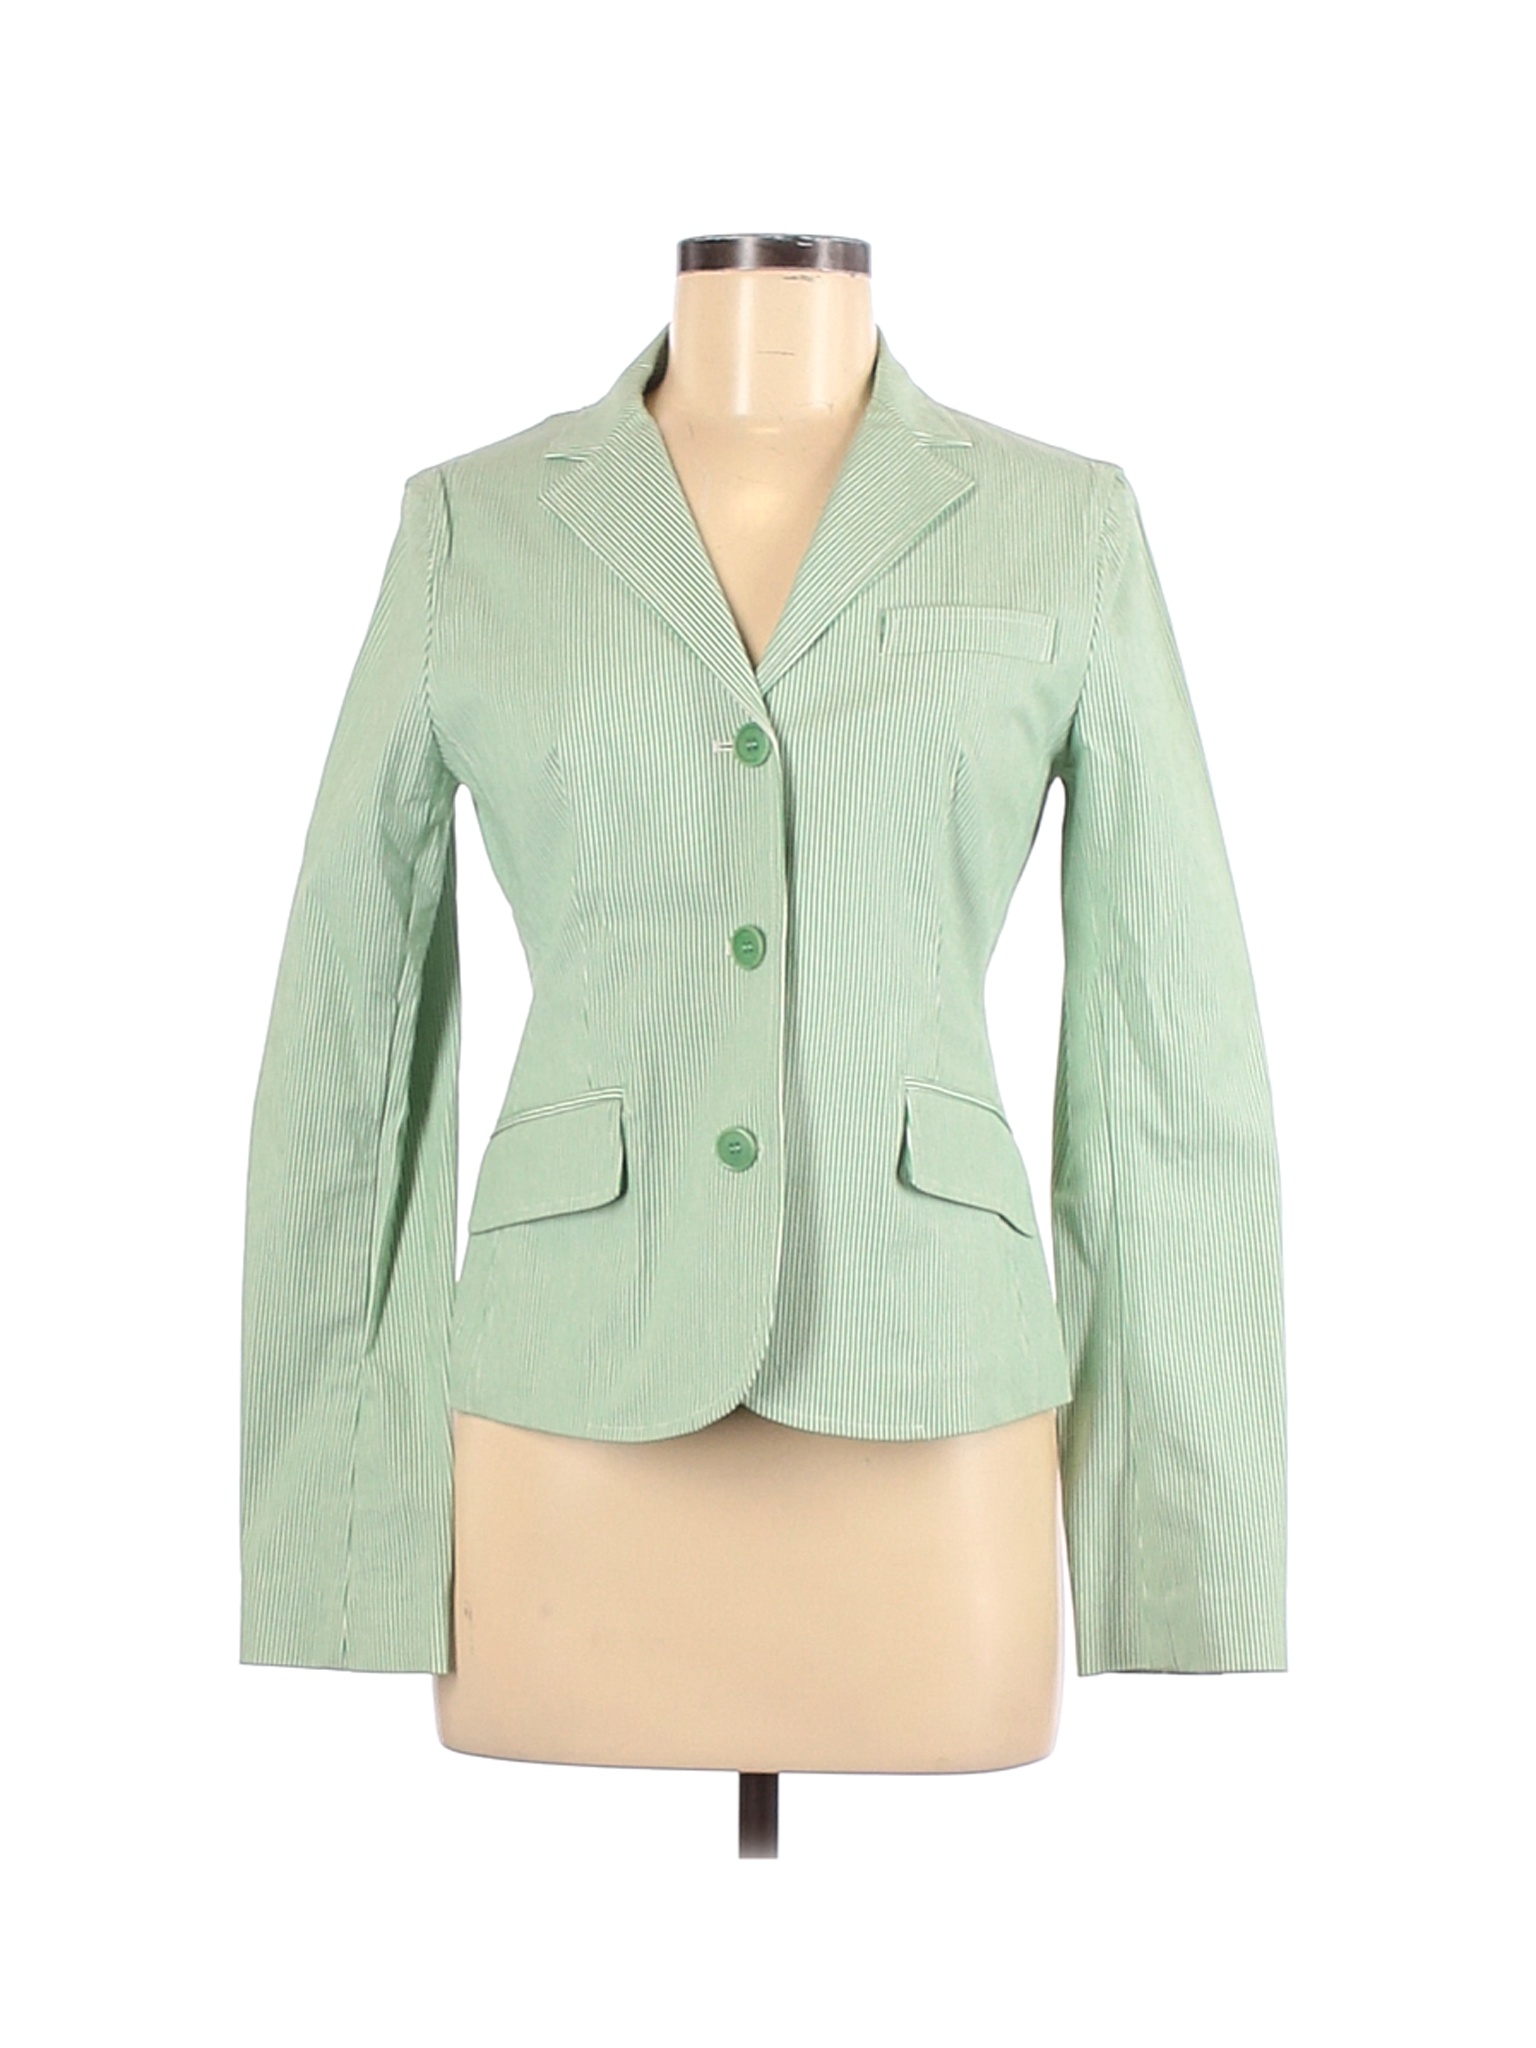 Theory Women Green Jacket 8 | eBay